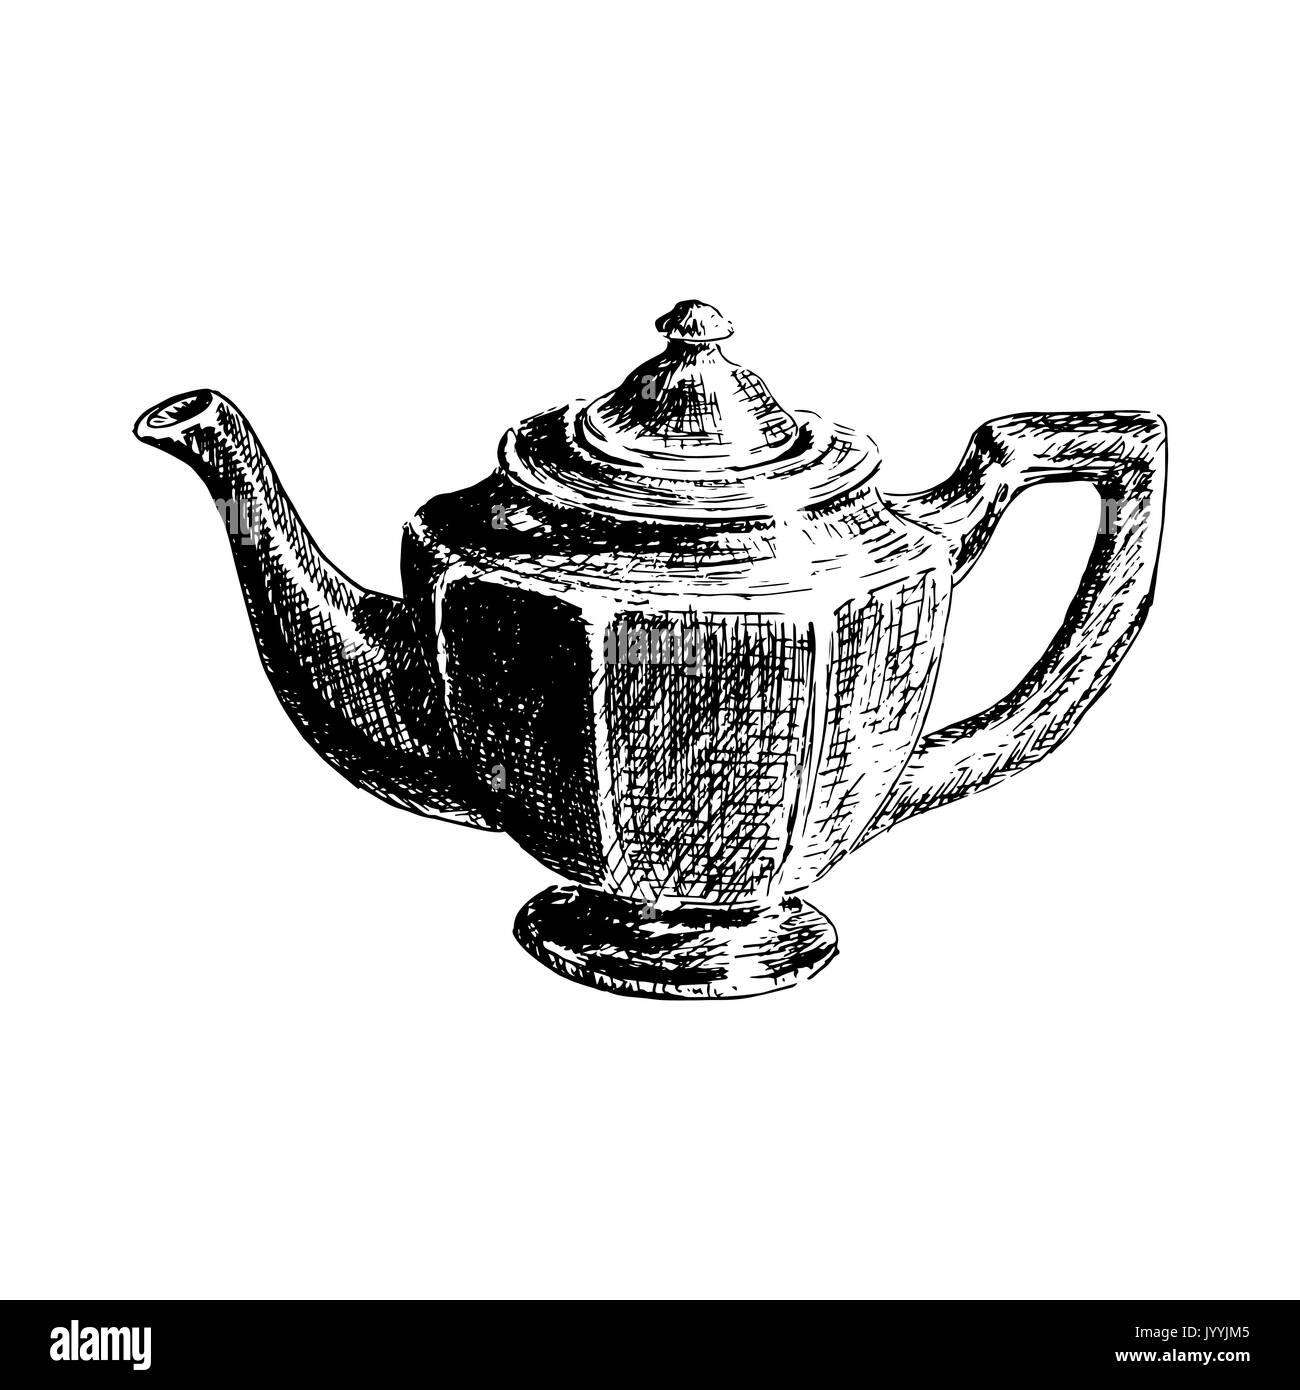 https://c8.alamy.com/comp/JYYJM5/graphic-hand-drawn-tea-pot-on-white-background-kitchenware-sketch-JYYJM5.jpg